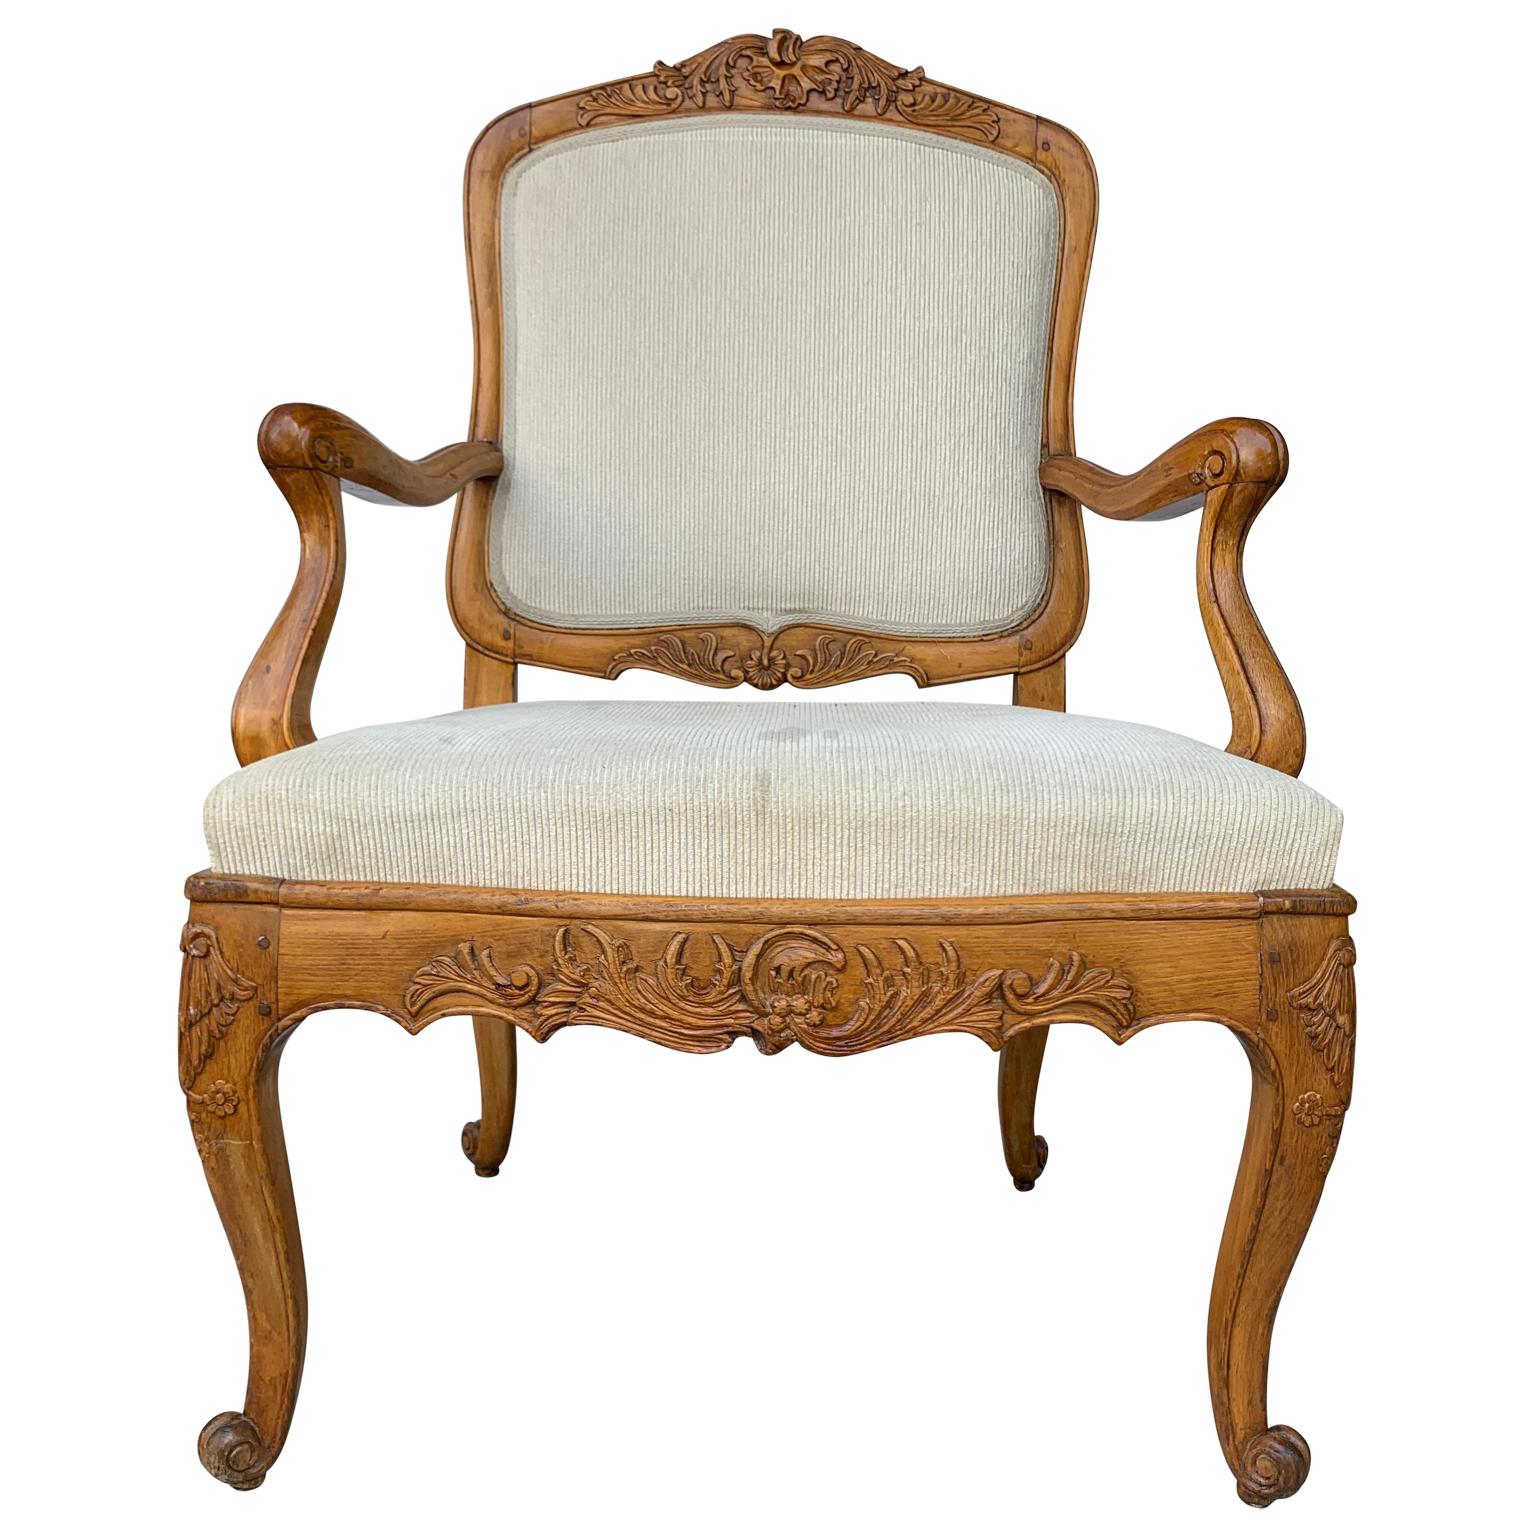 Large wide danish rococo armchair, circa 1770.